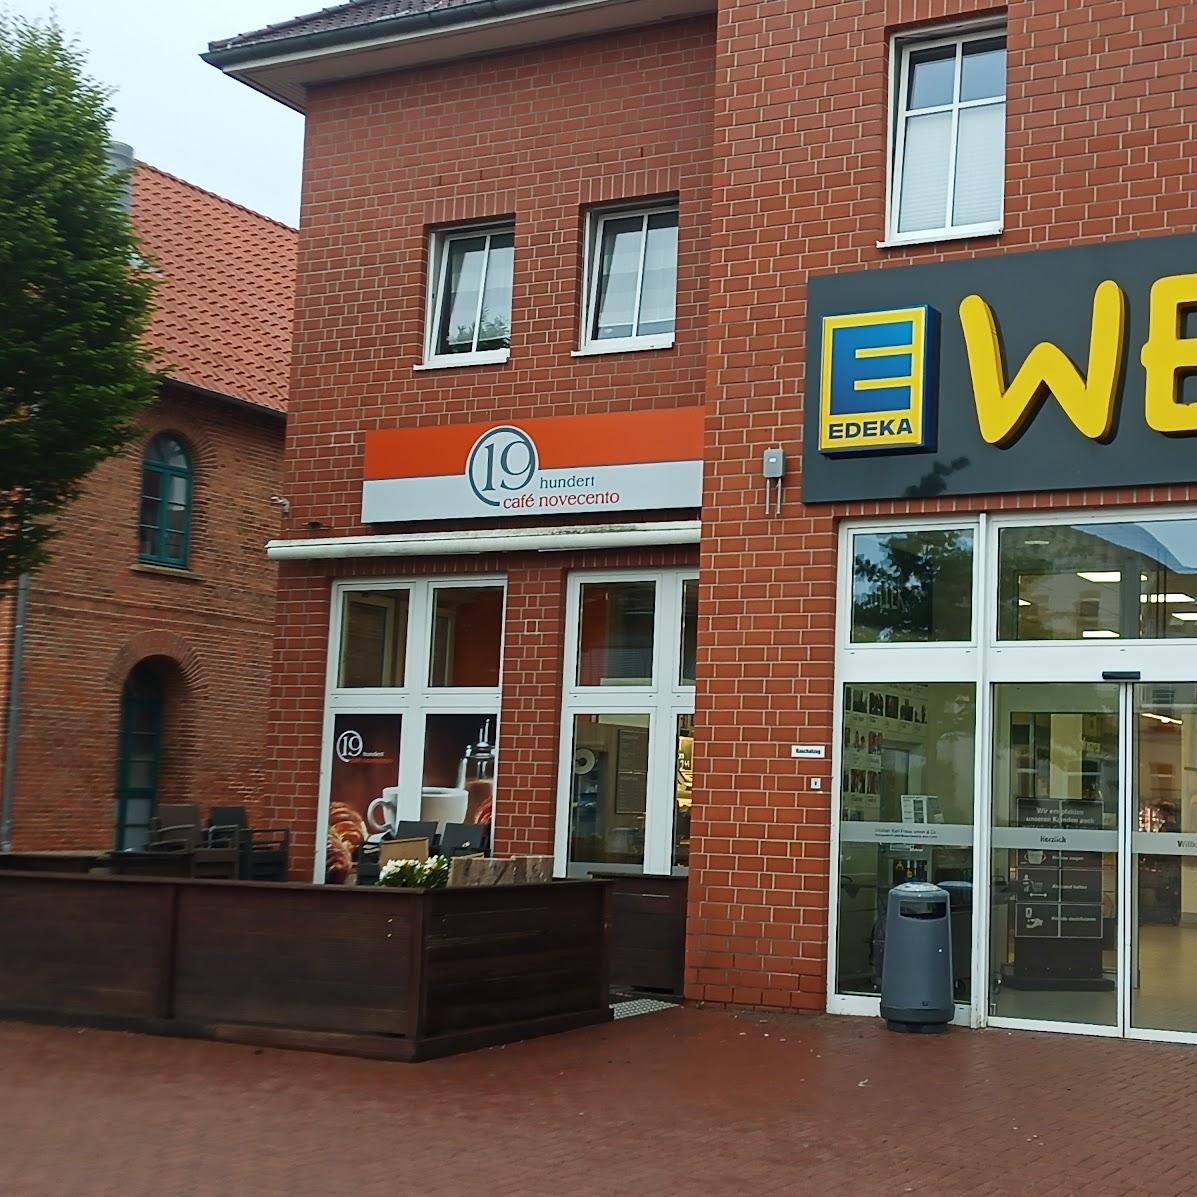 Restaurant "Café Novecento" in Rodenberg